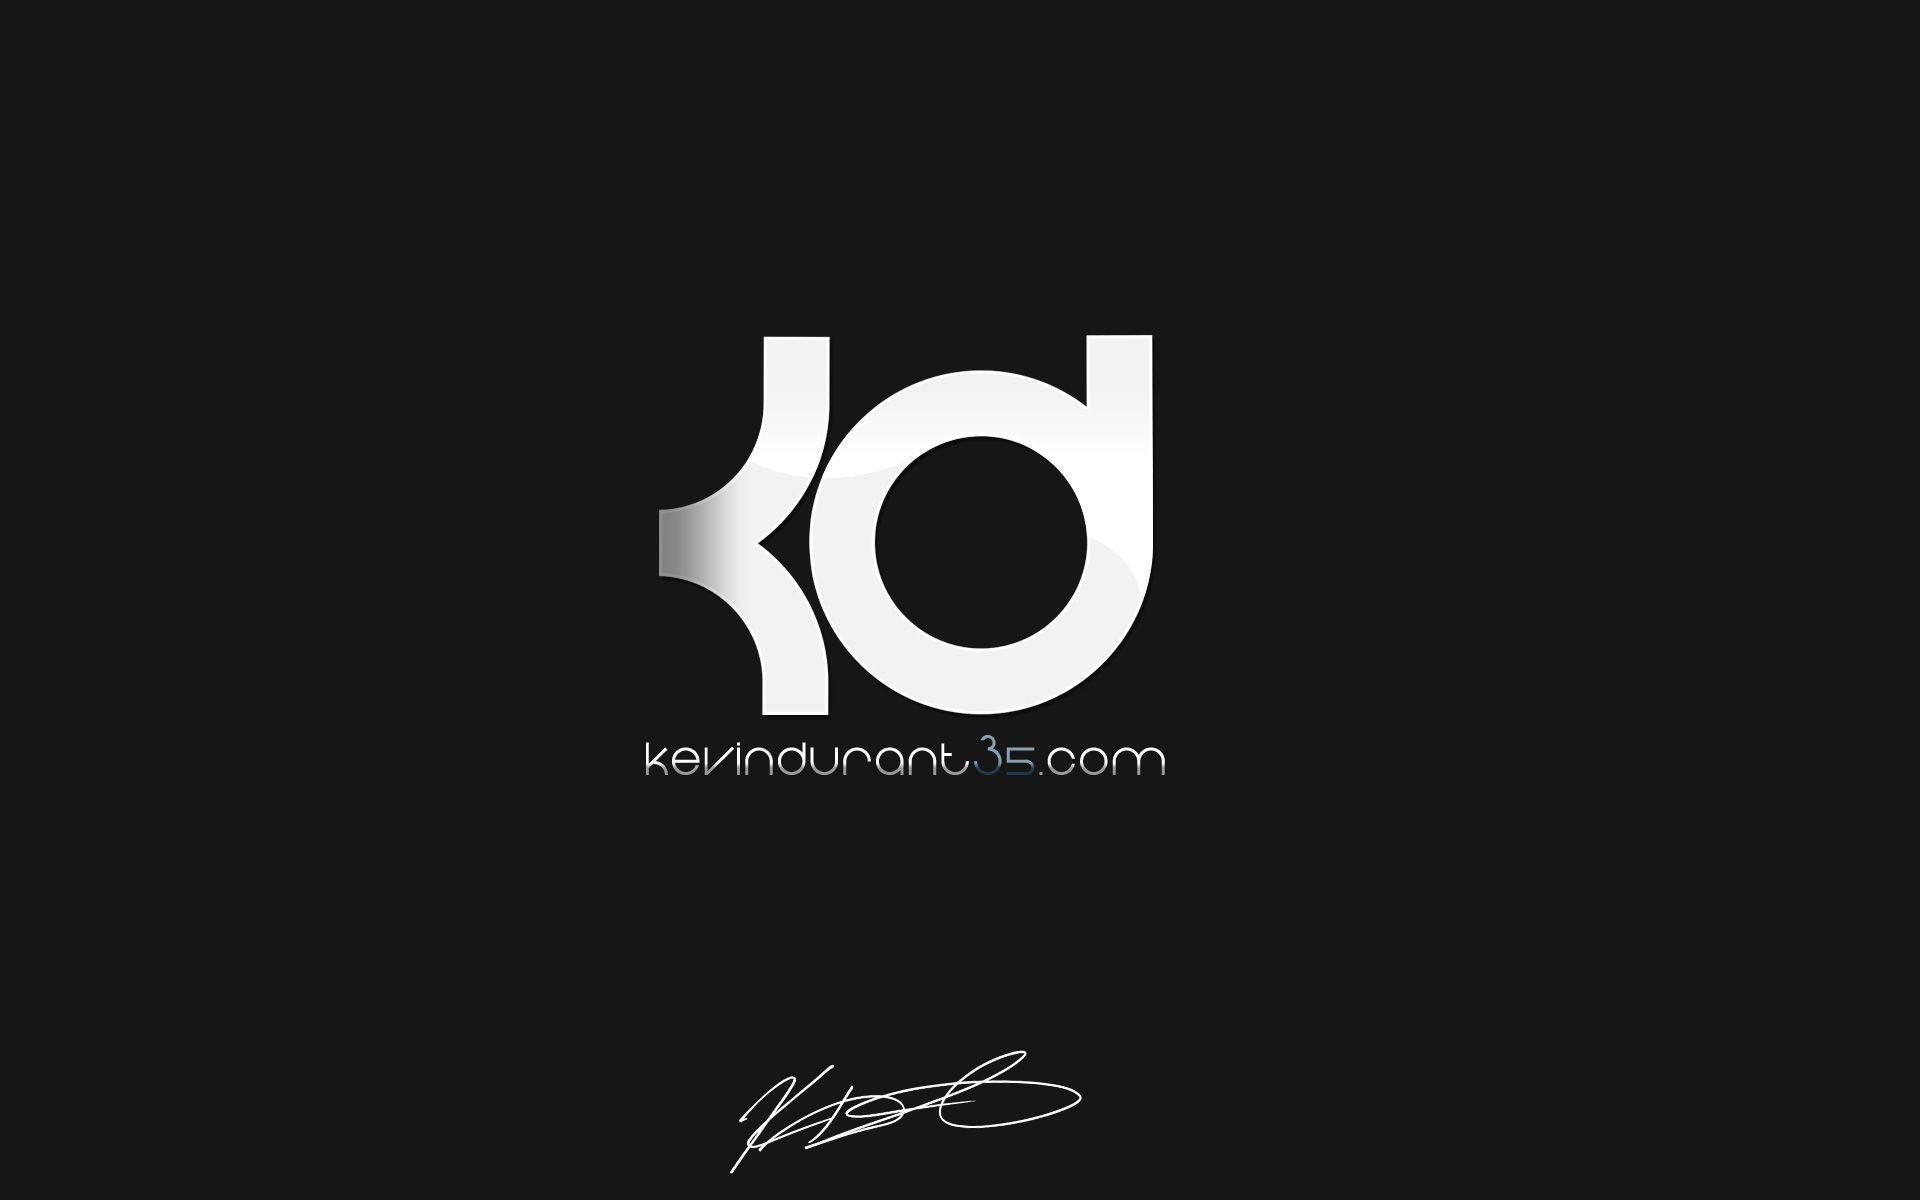 Kevin Durant Kd Logo Wallpaper (75+